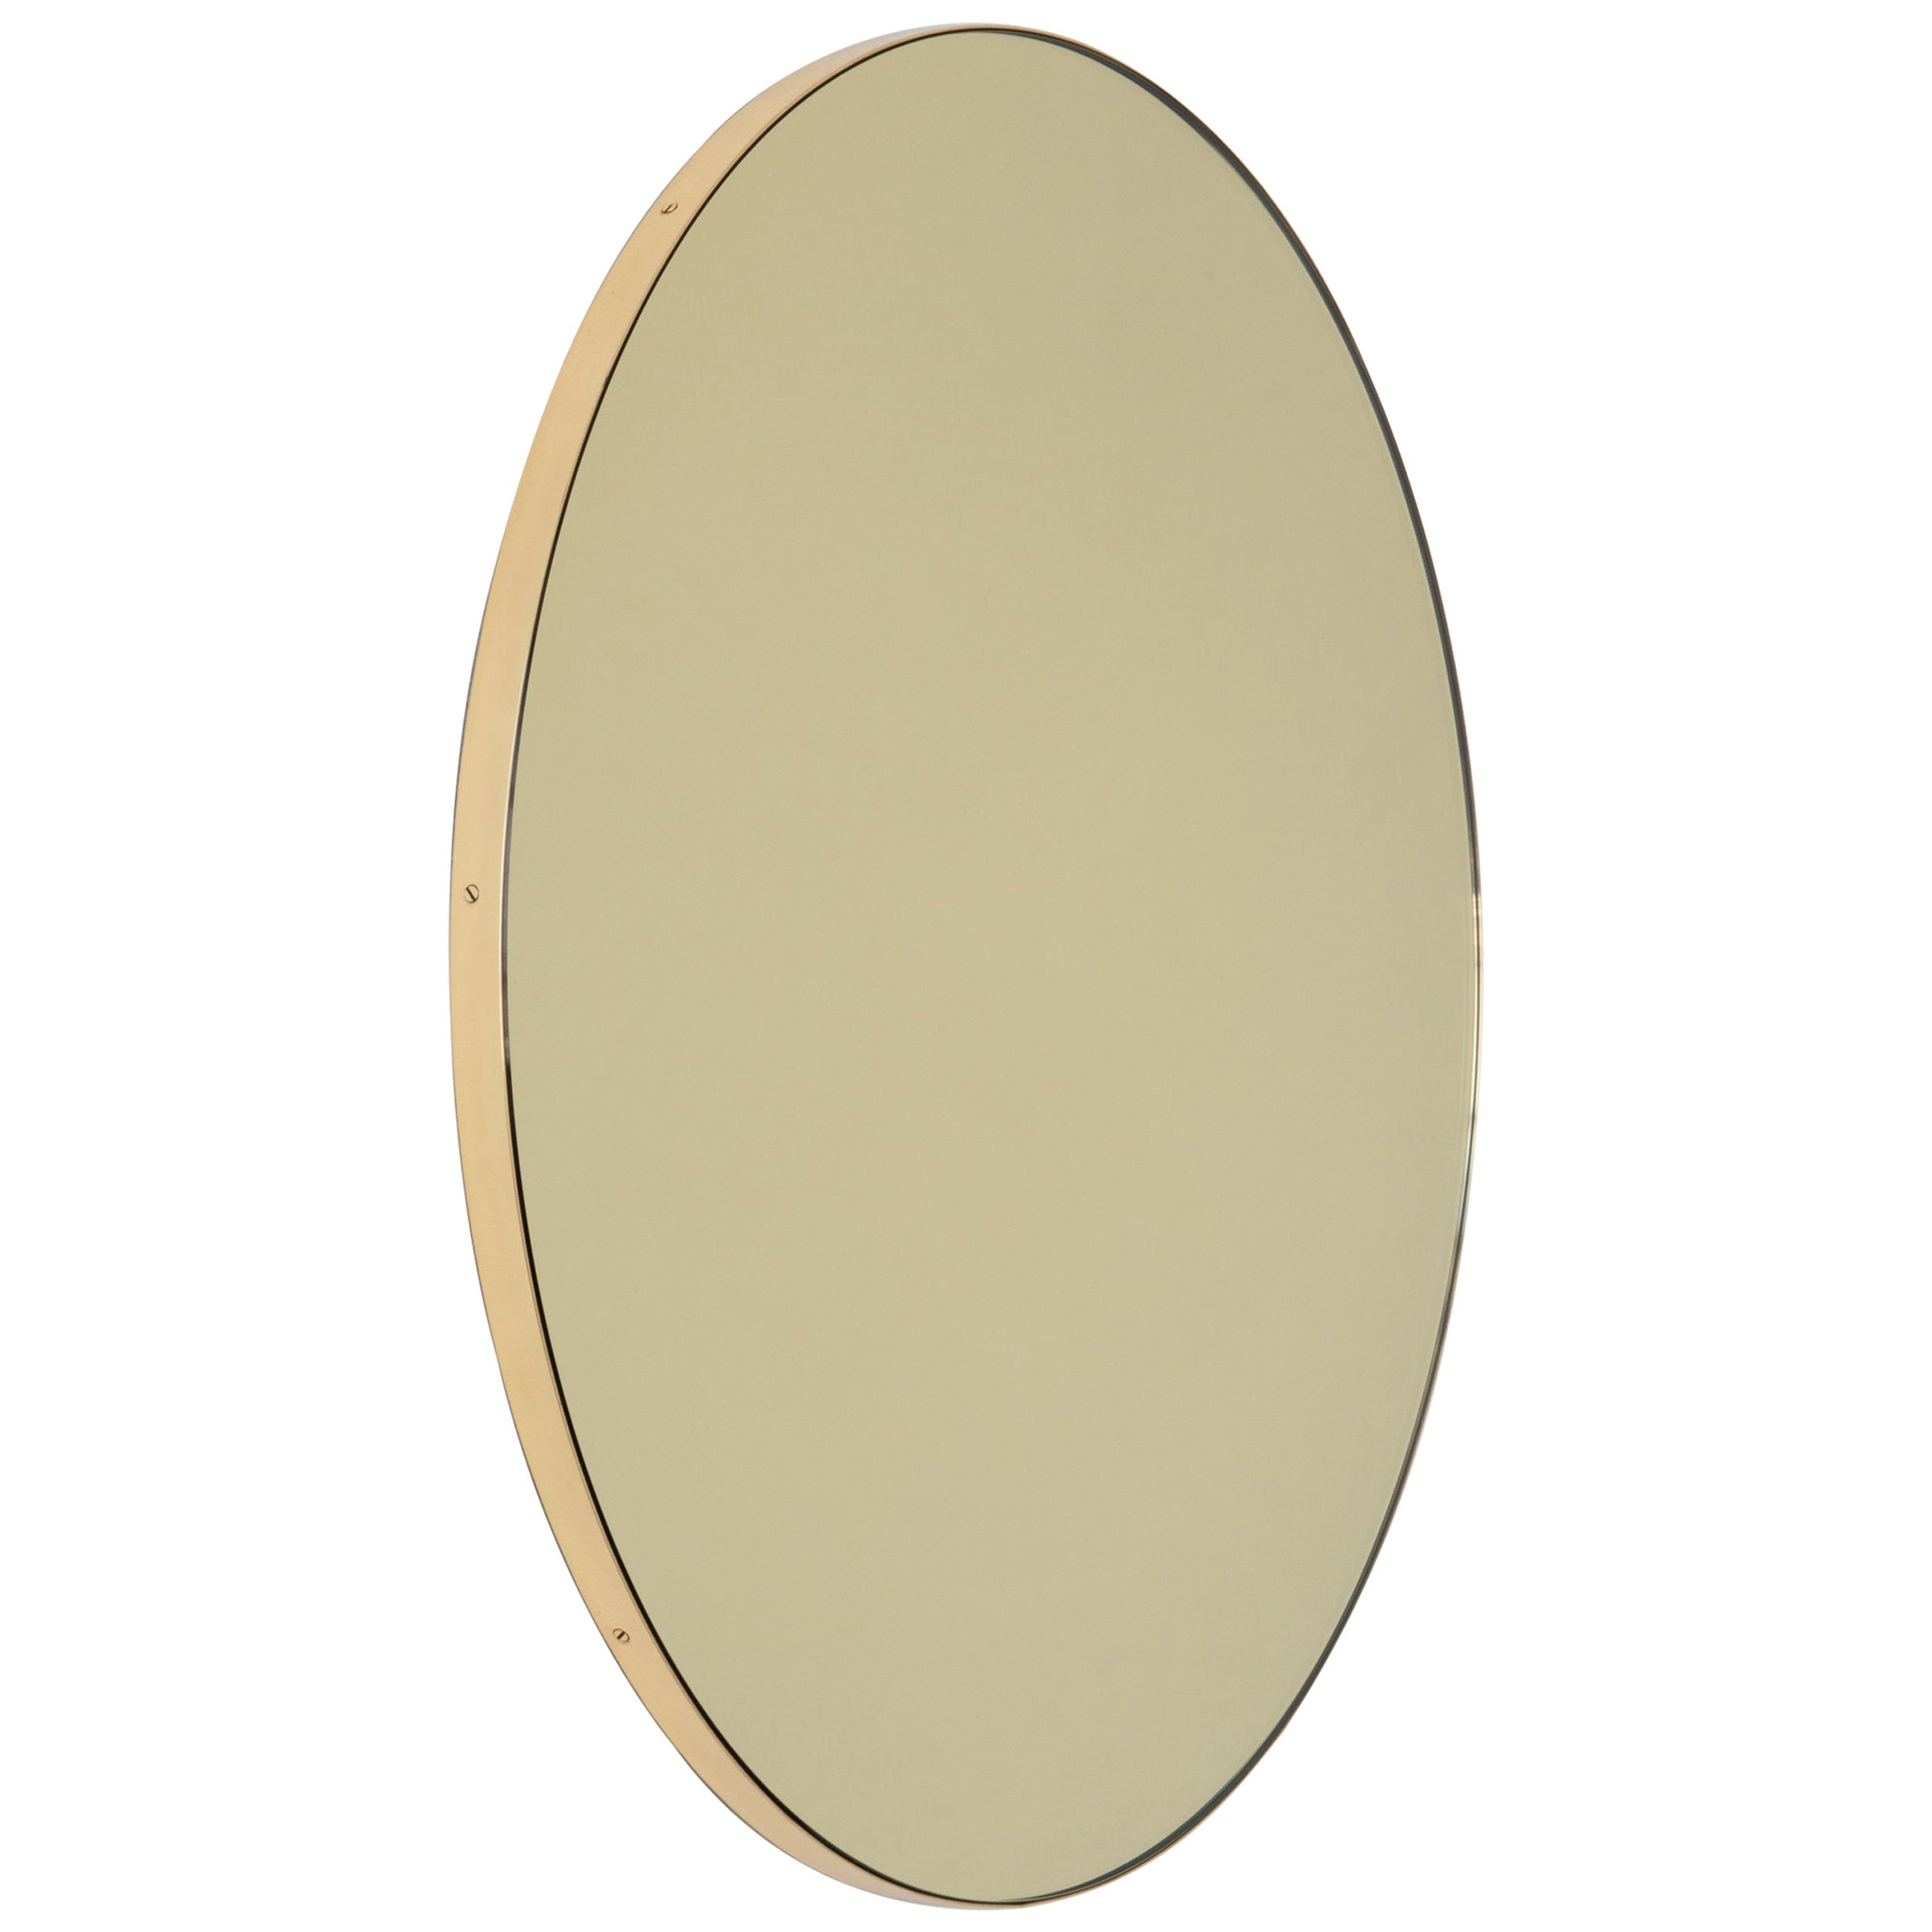 Orbis Gold getönter runder moderner Spiegel mit gebürstetem Messingrahmen, groß